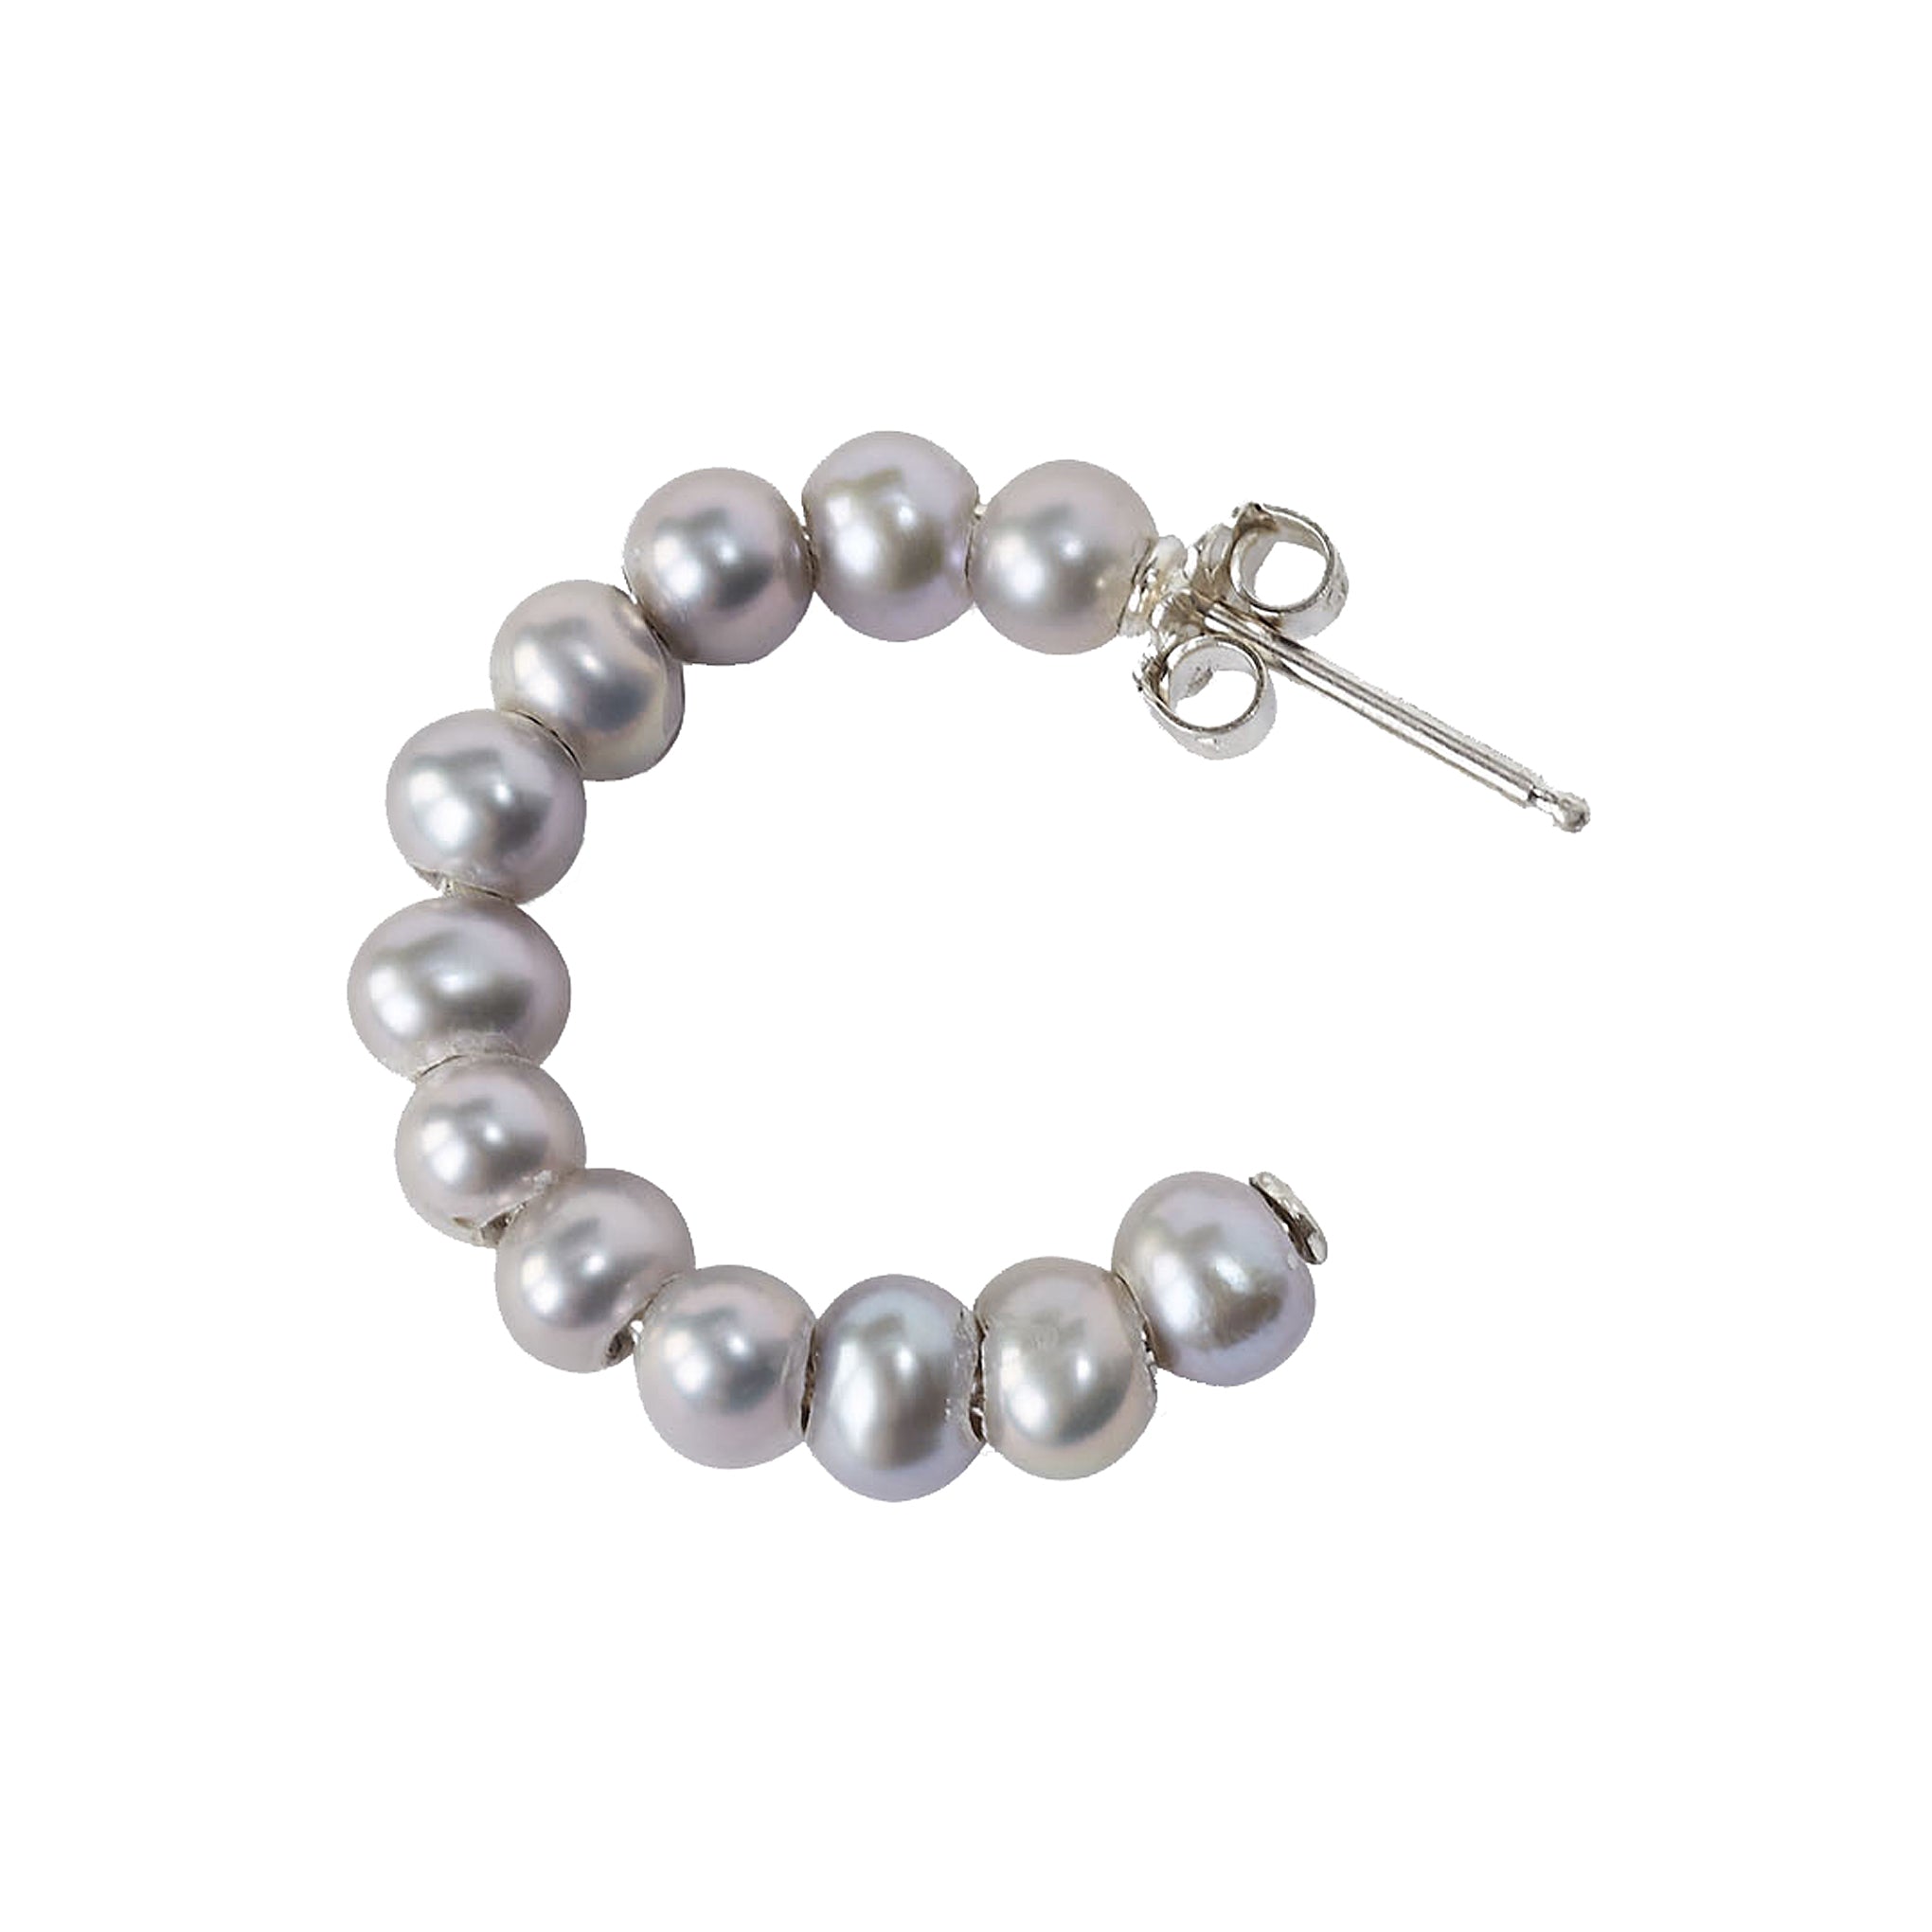 Chan Luu Small Holly Hoop Earrings in Grey Pearl and Sterling Silver